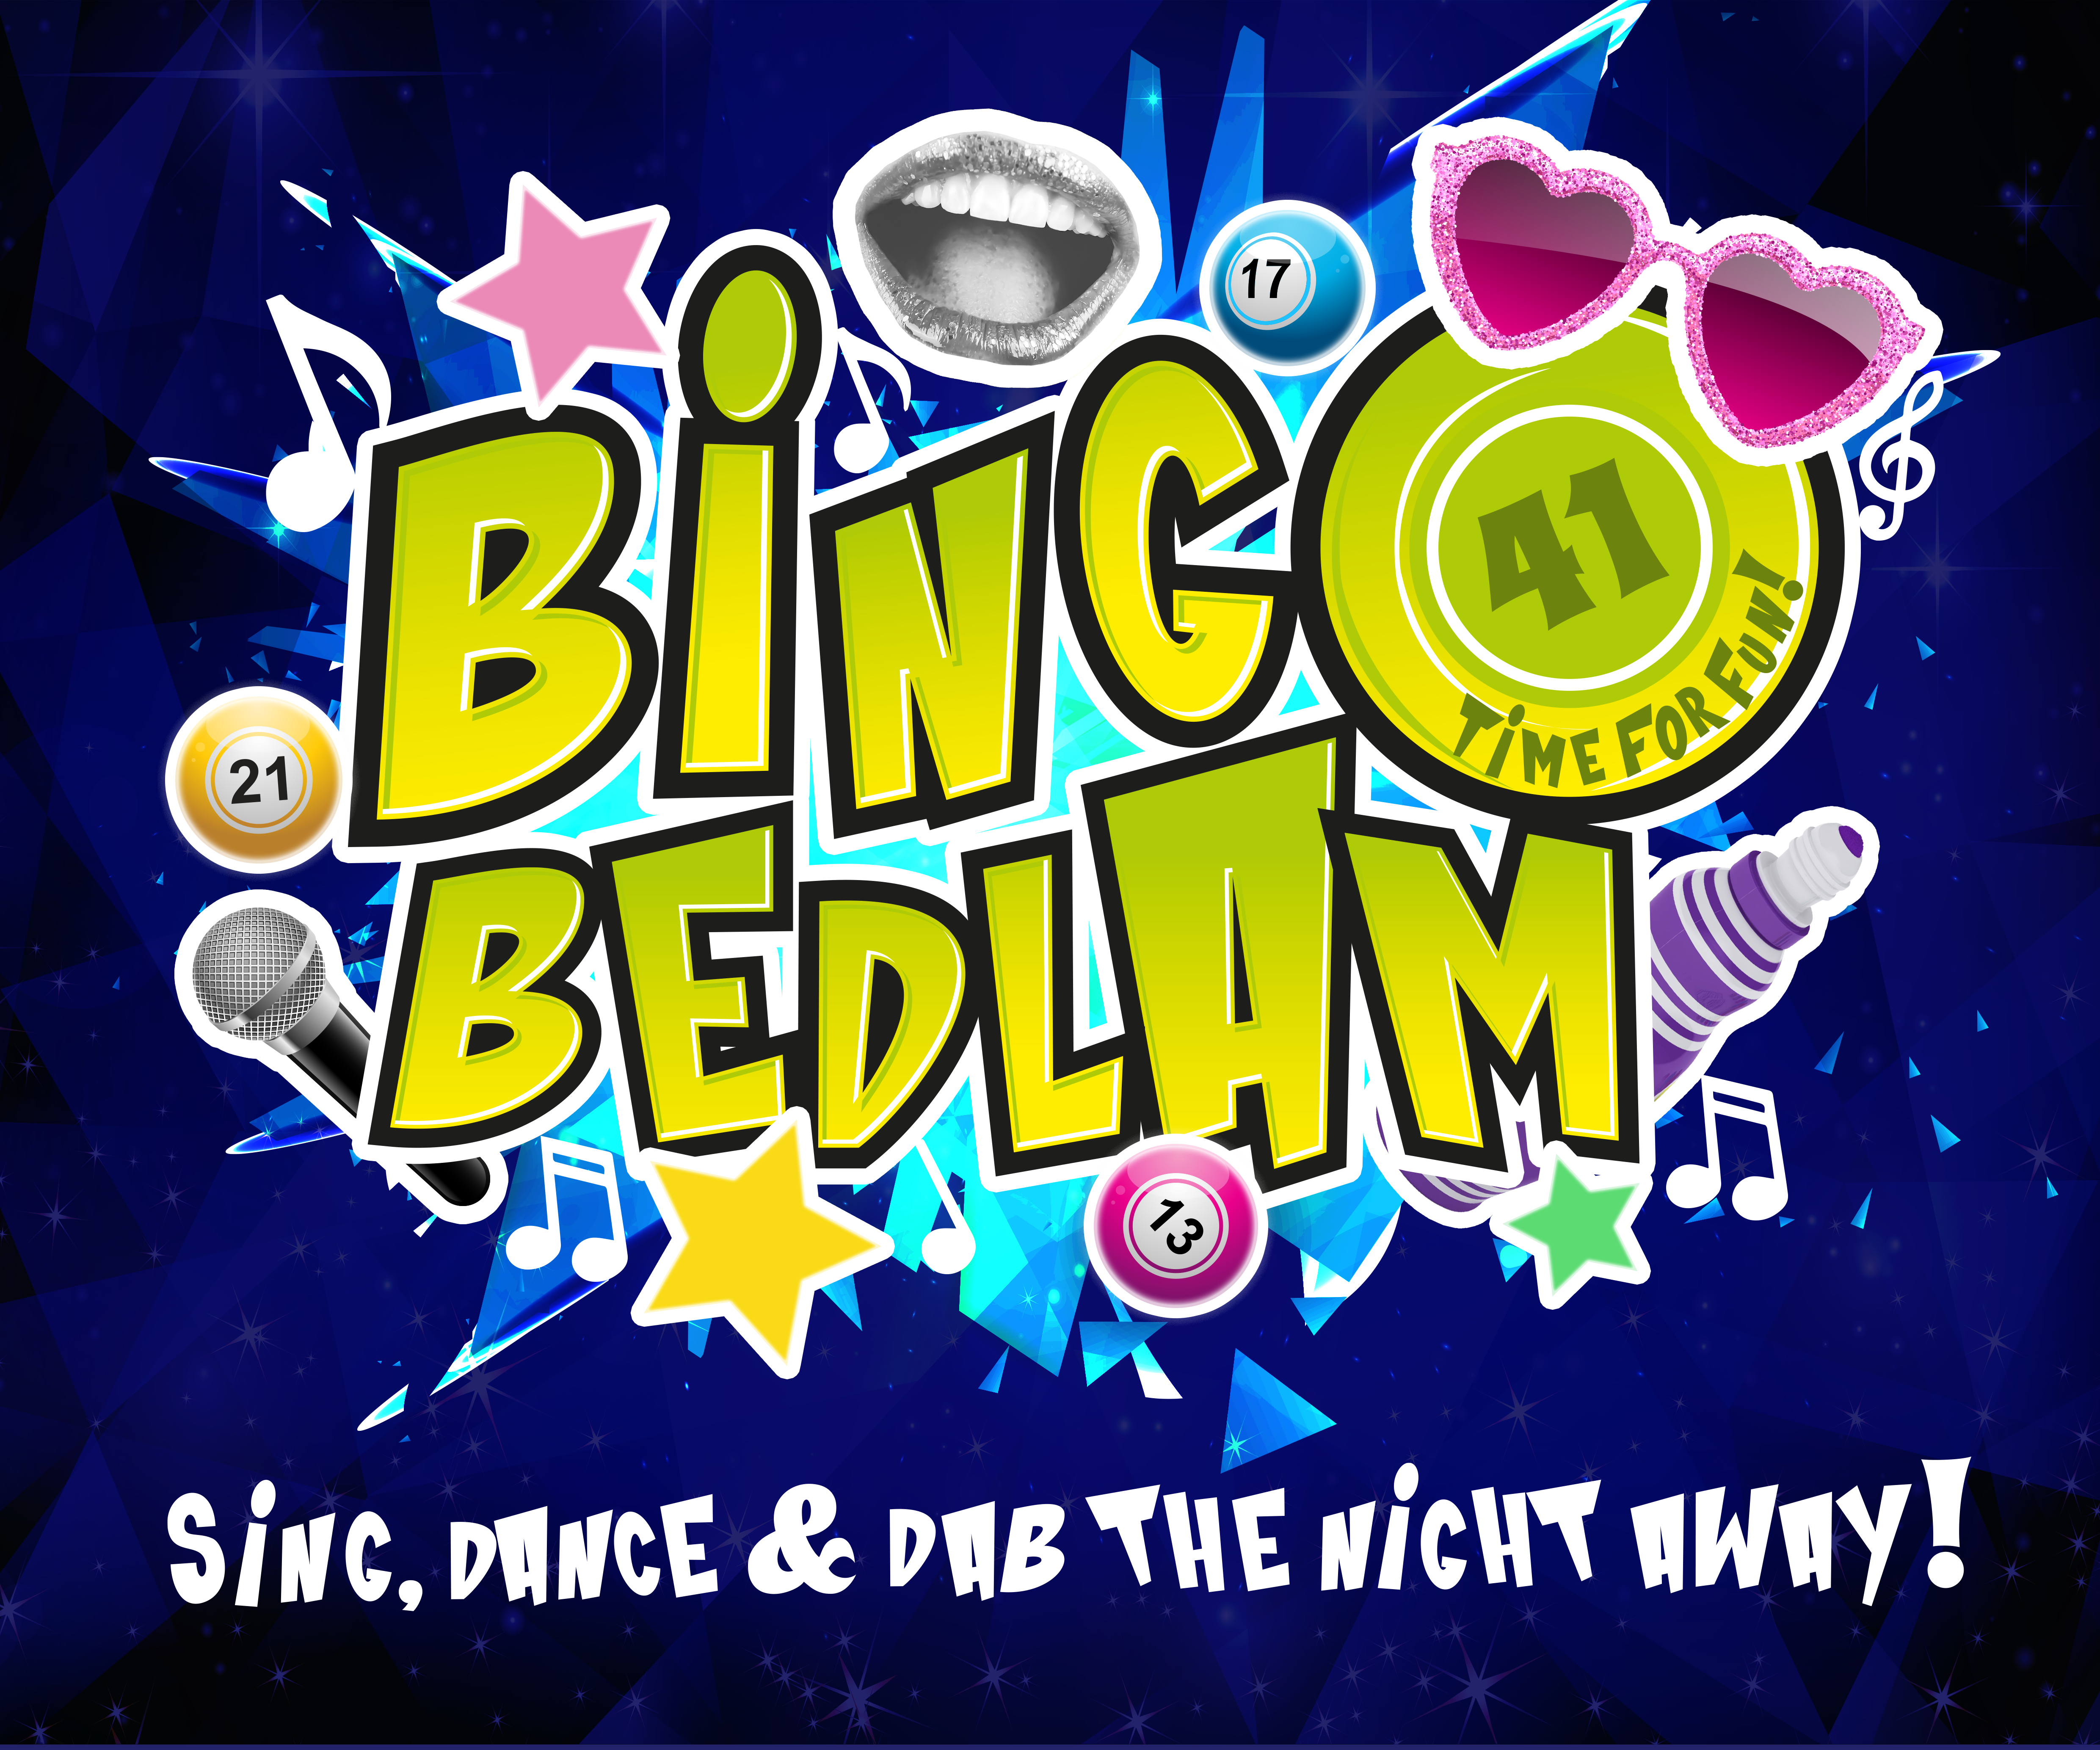 Bingo Bedlam - Sing, Dance & Dab The Night Away